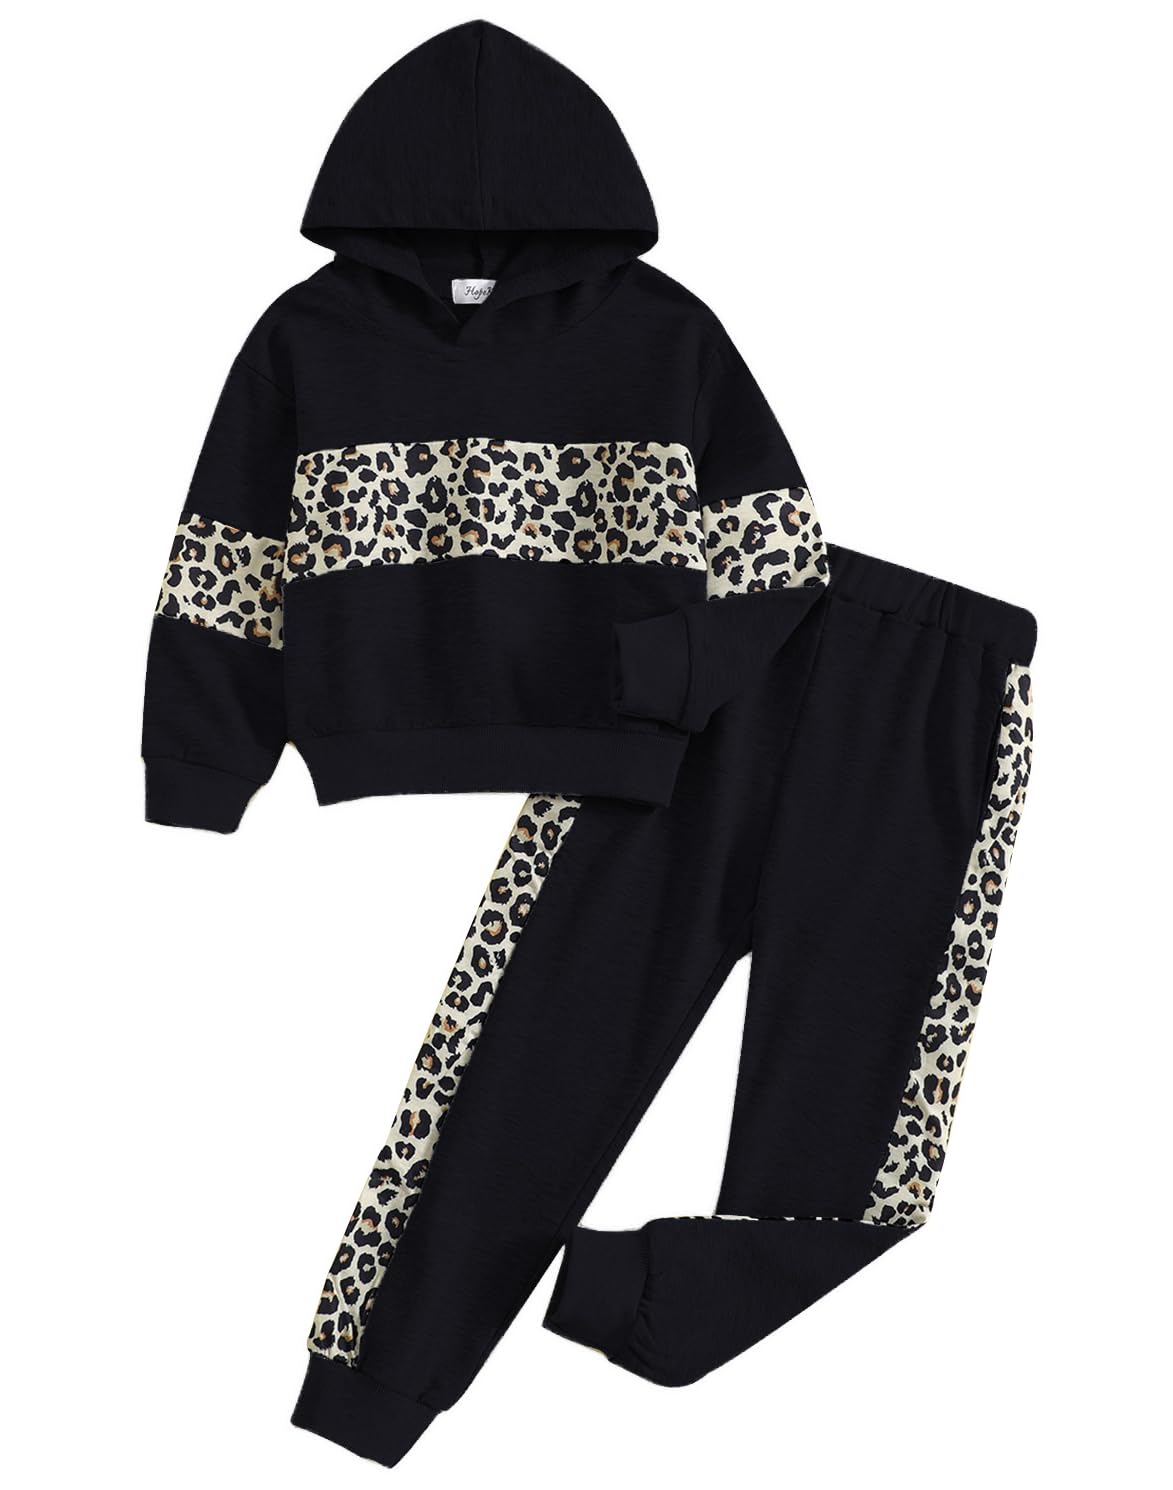 HopeKitt Girls Jogger Set 2 Piece Hoodie and Sweatpants Kids Clothing Sets Winter Outfit Black 12Y